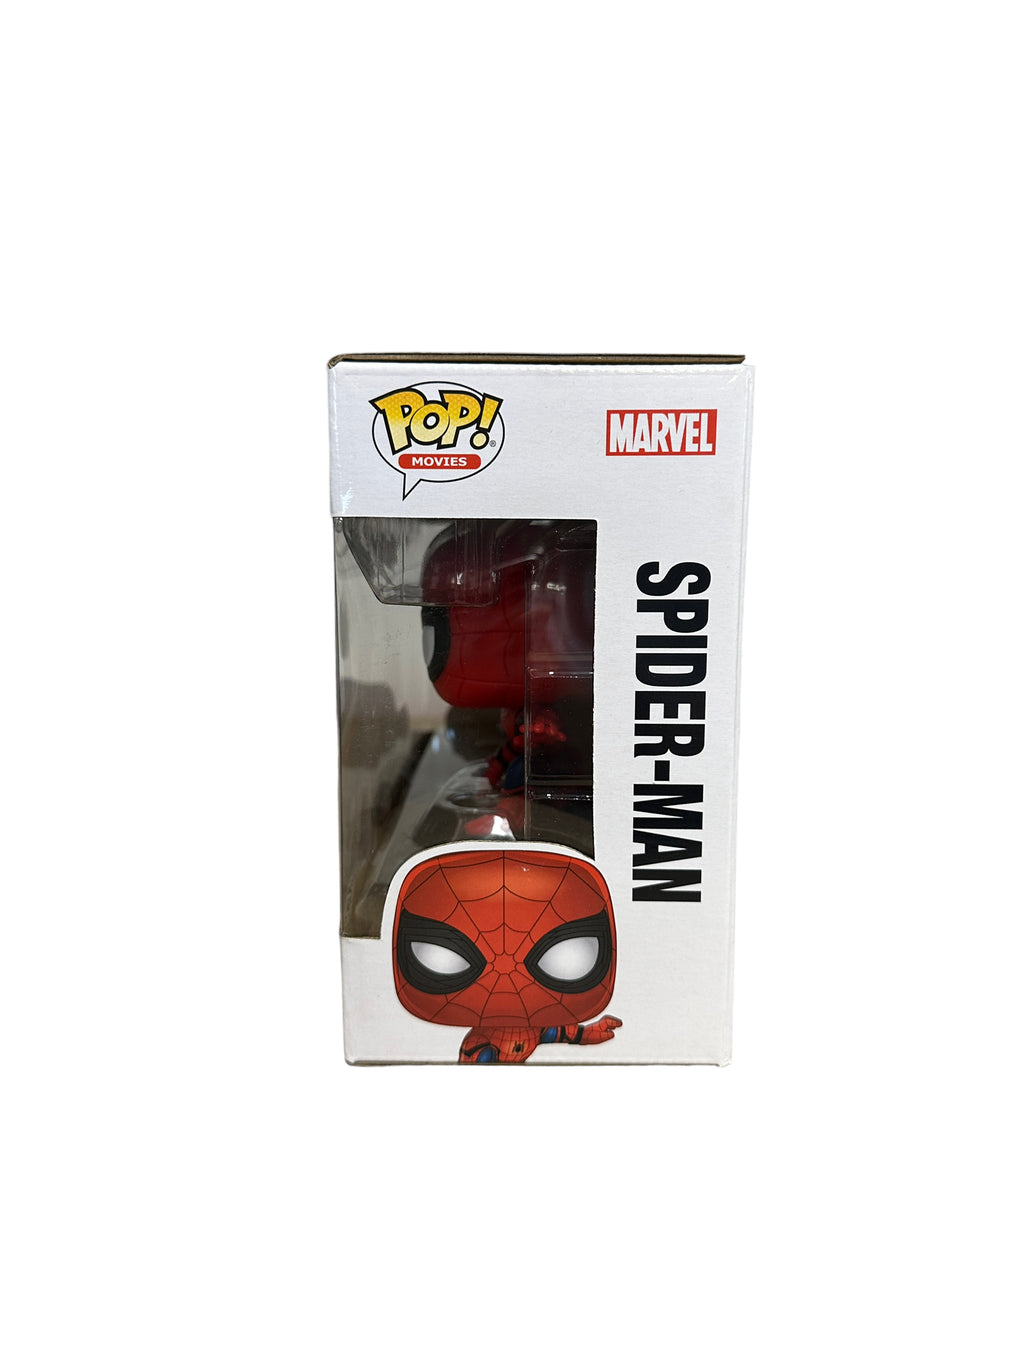 Iron Man / Spider-Man 2 Pack Funko Pop! - Spider-Man Homecoming - Cond